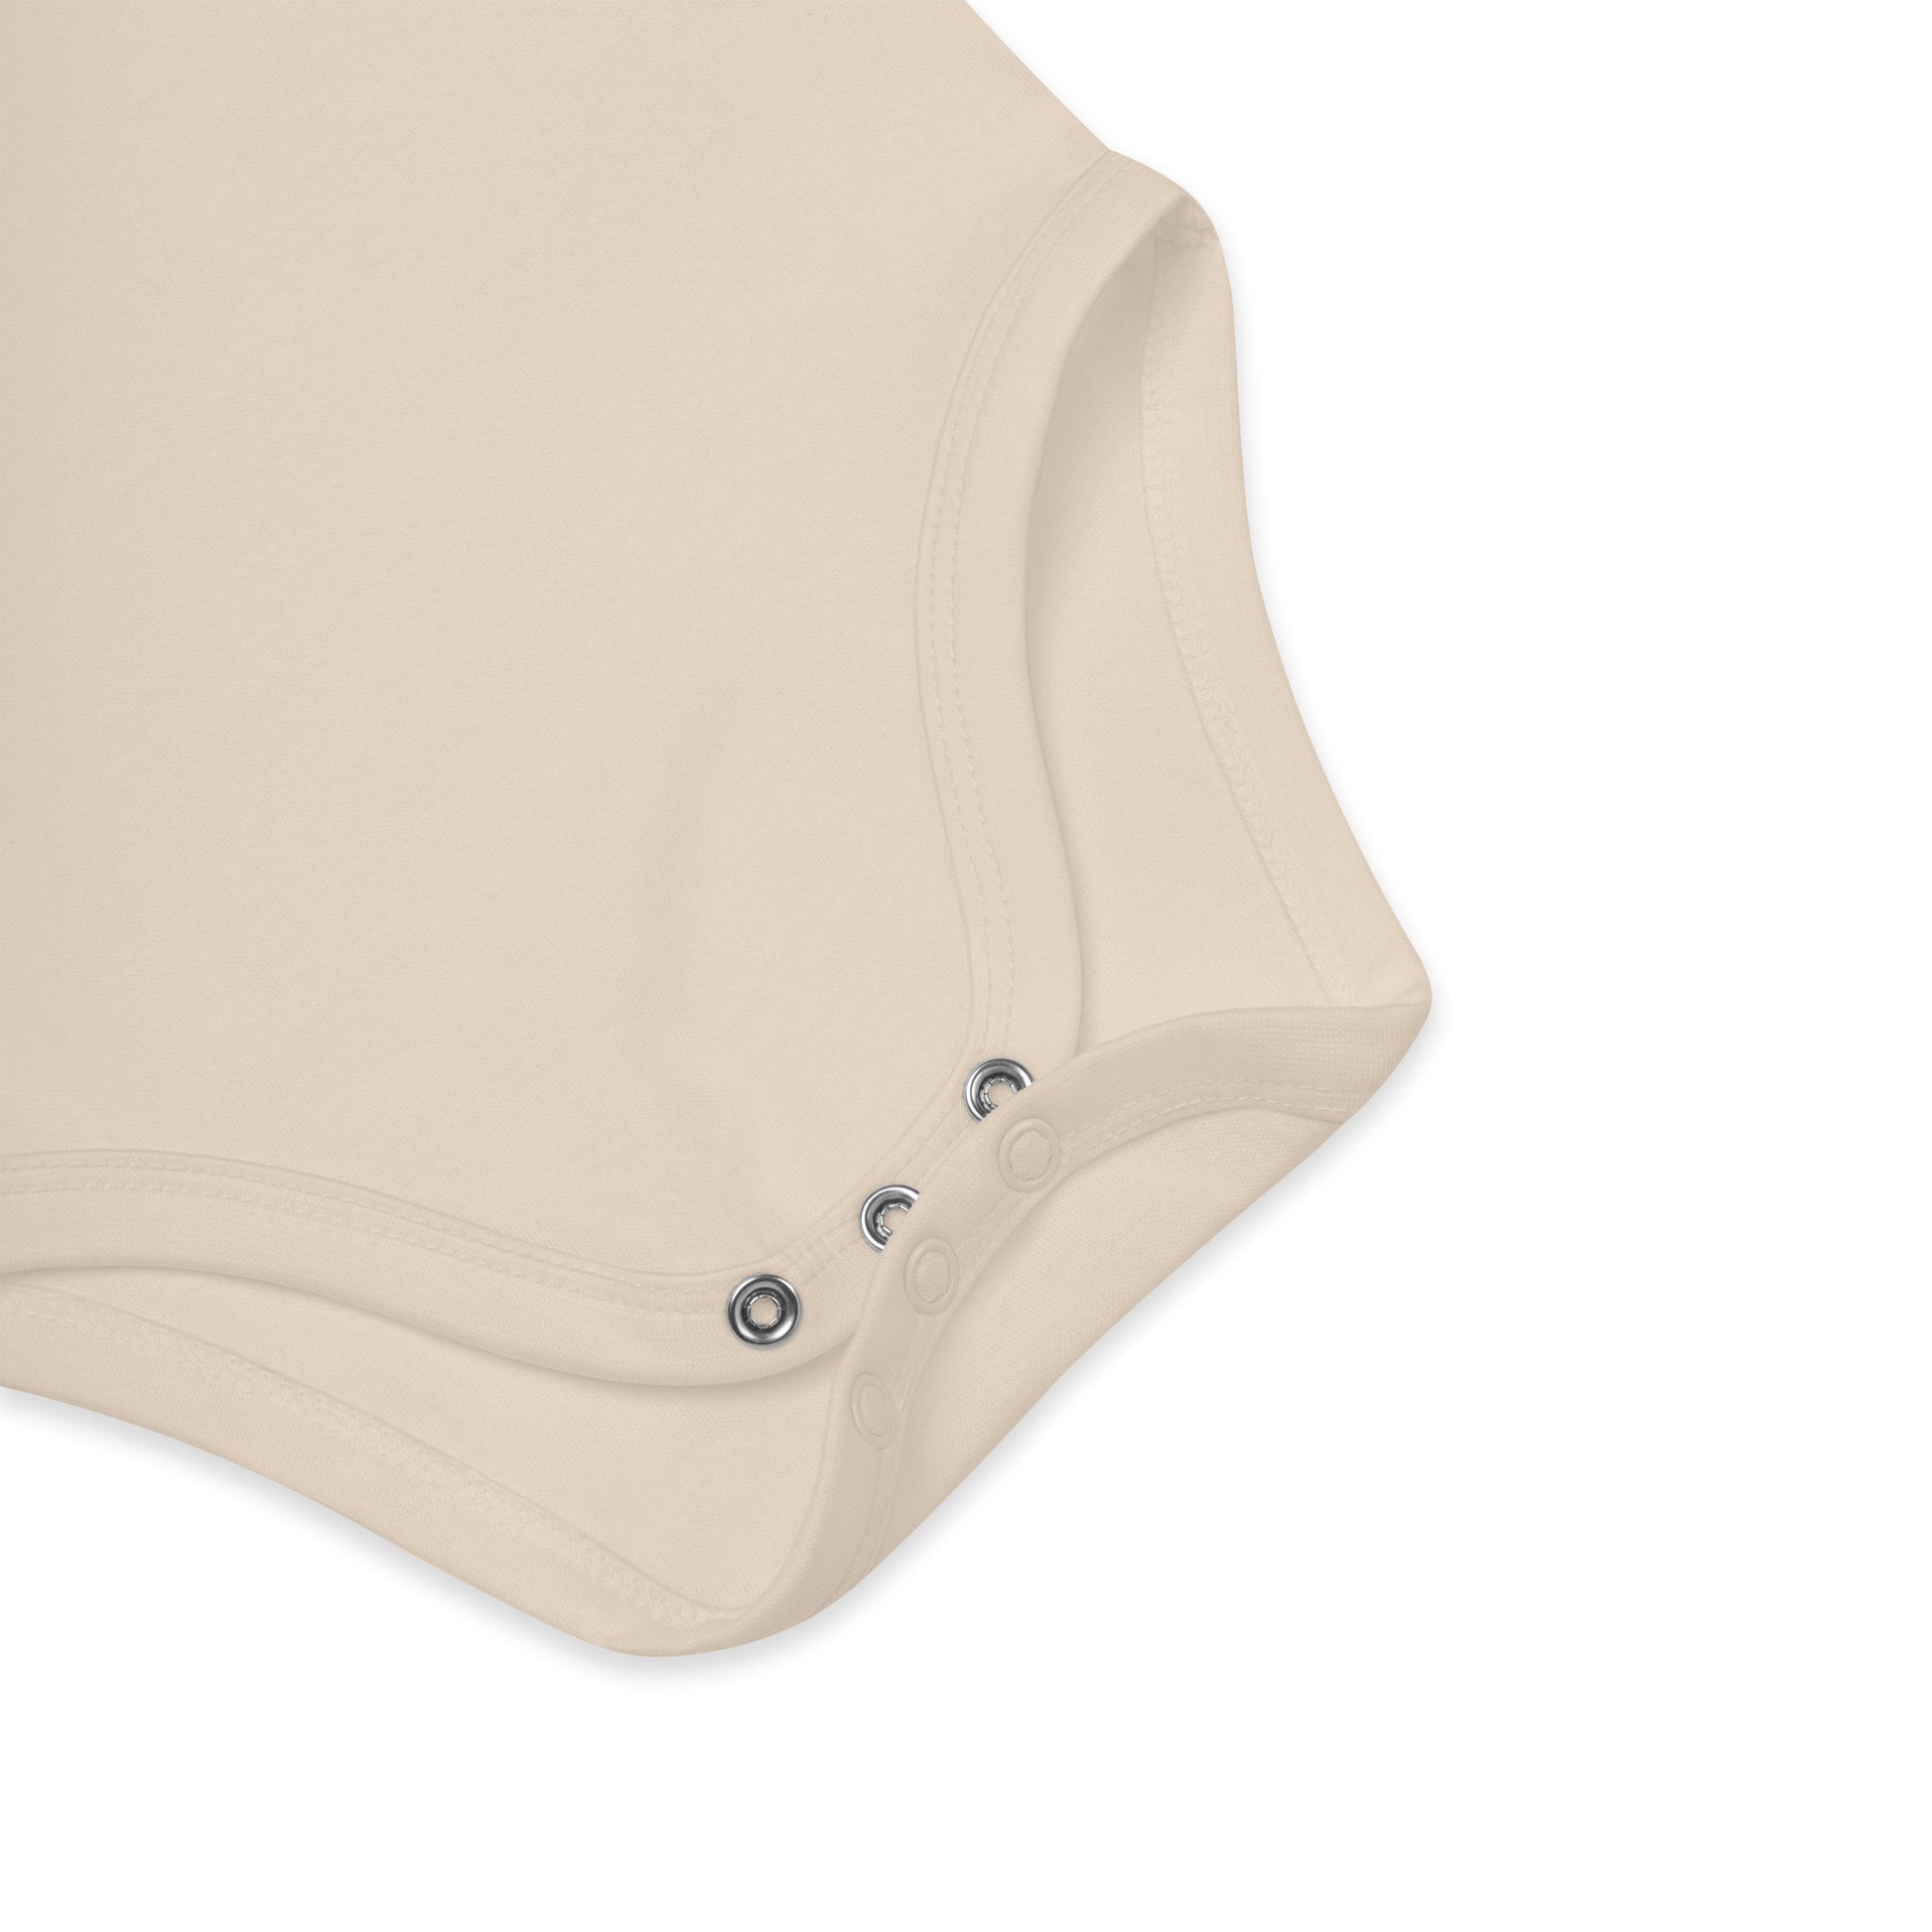 Coal Tits Organic cotton baby bodysuit - One-piece- Print N Stuff - [designed in Turku Finland]